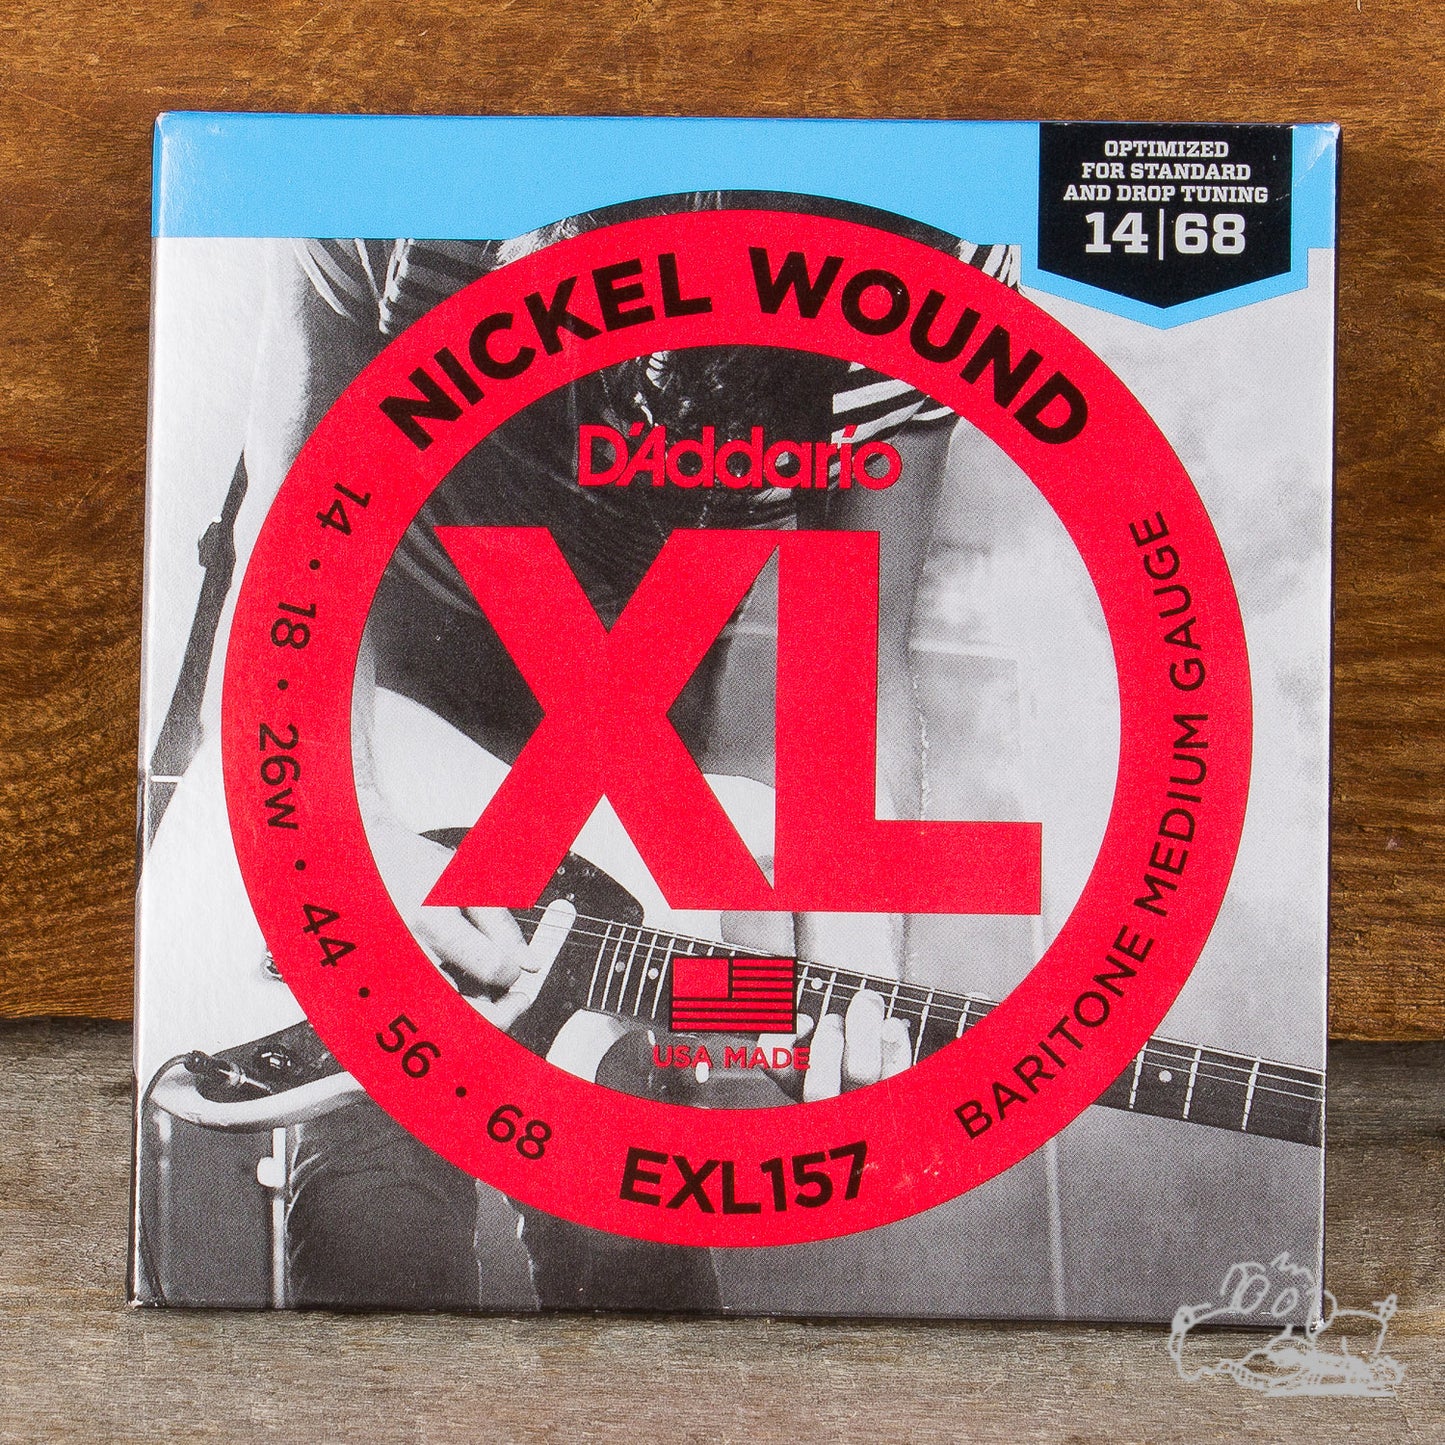 D'Addario XL Electric Baritone Guitar Strings - Nickel Wound - Medium 14-68 (EXL157)